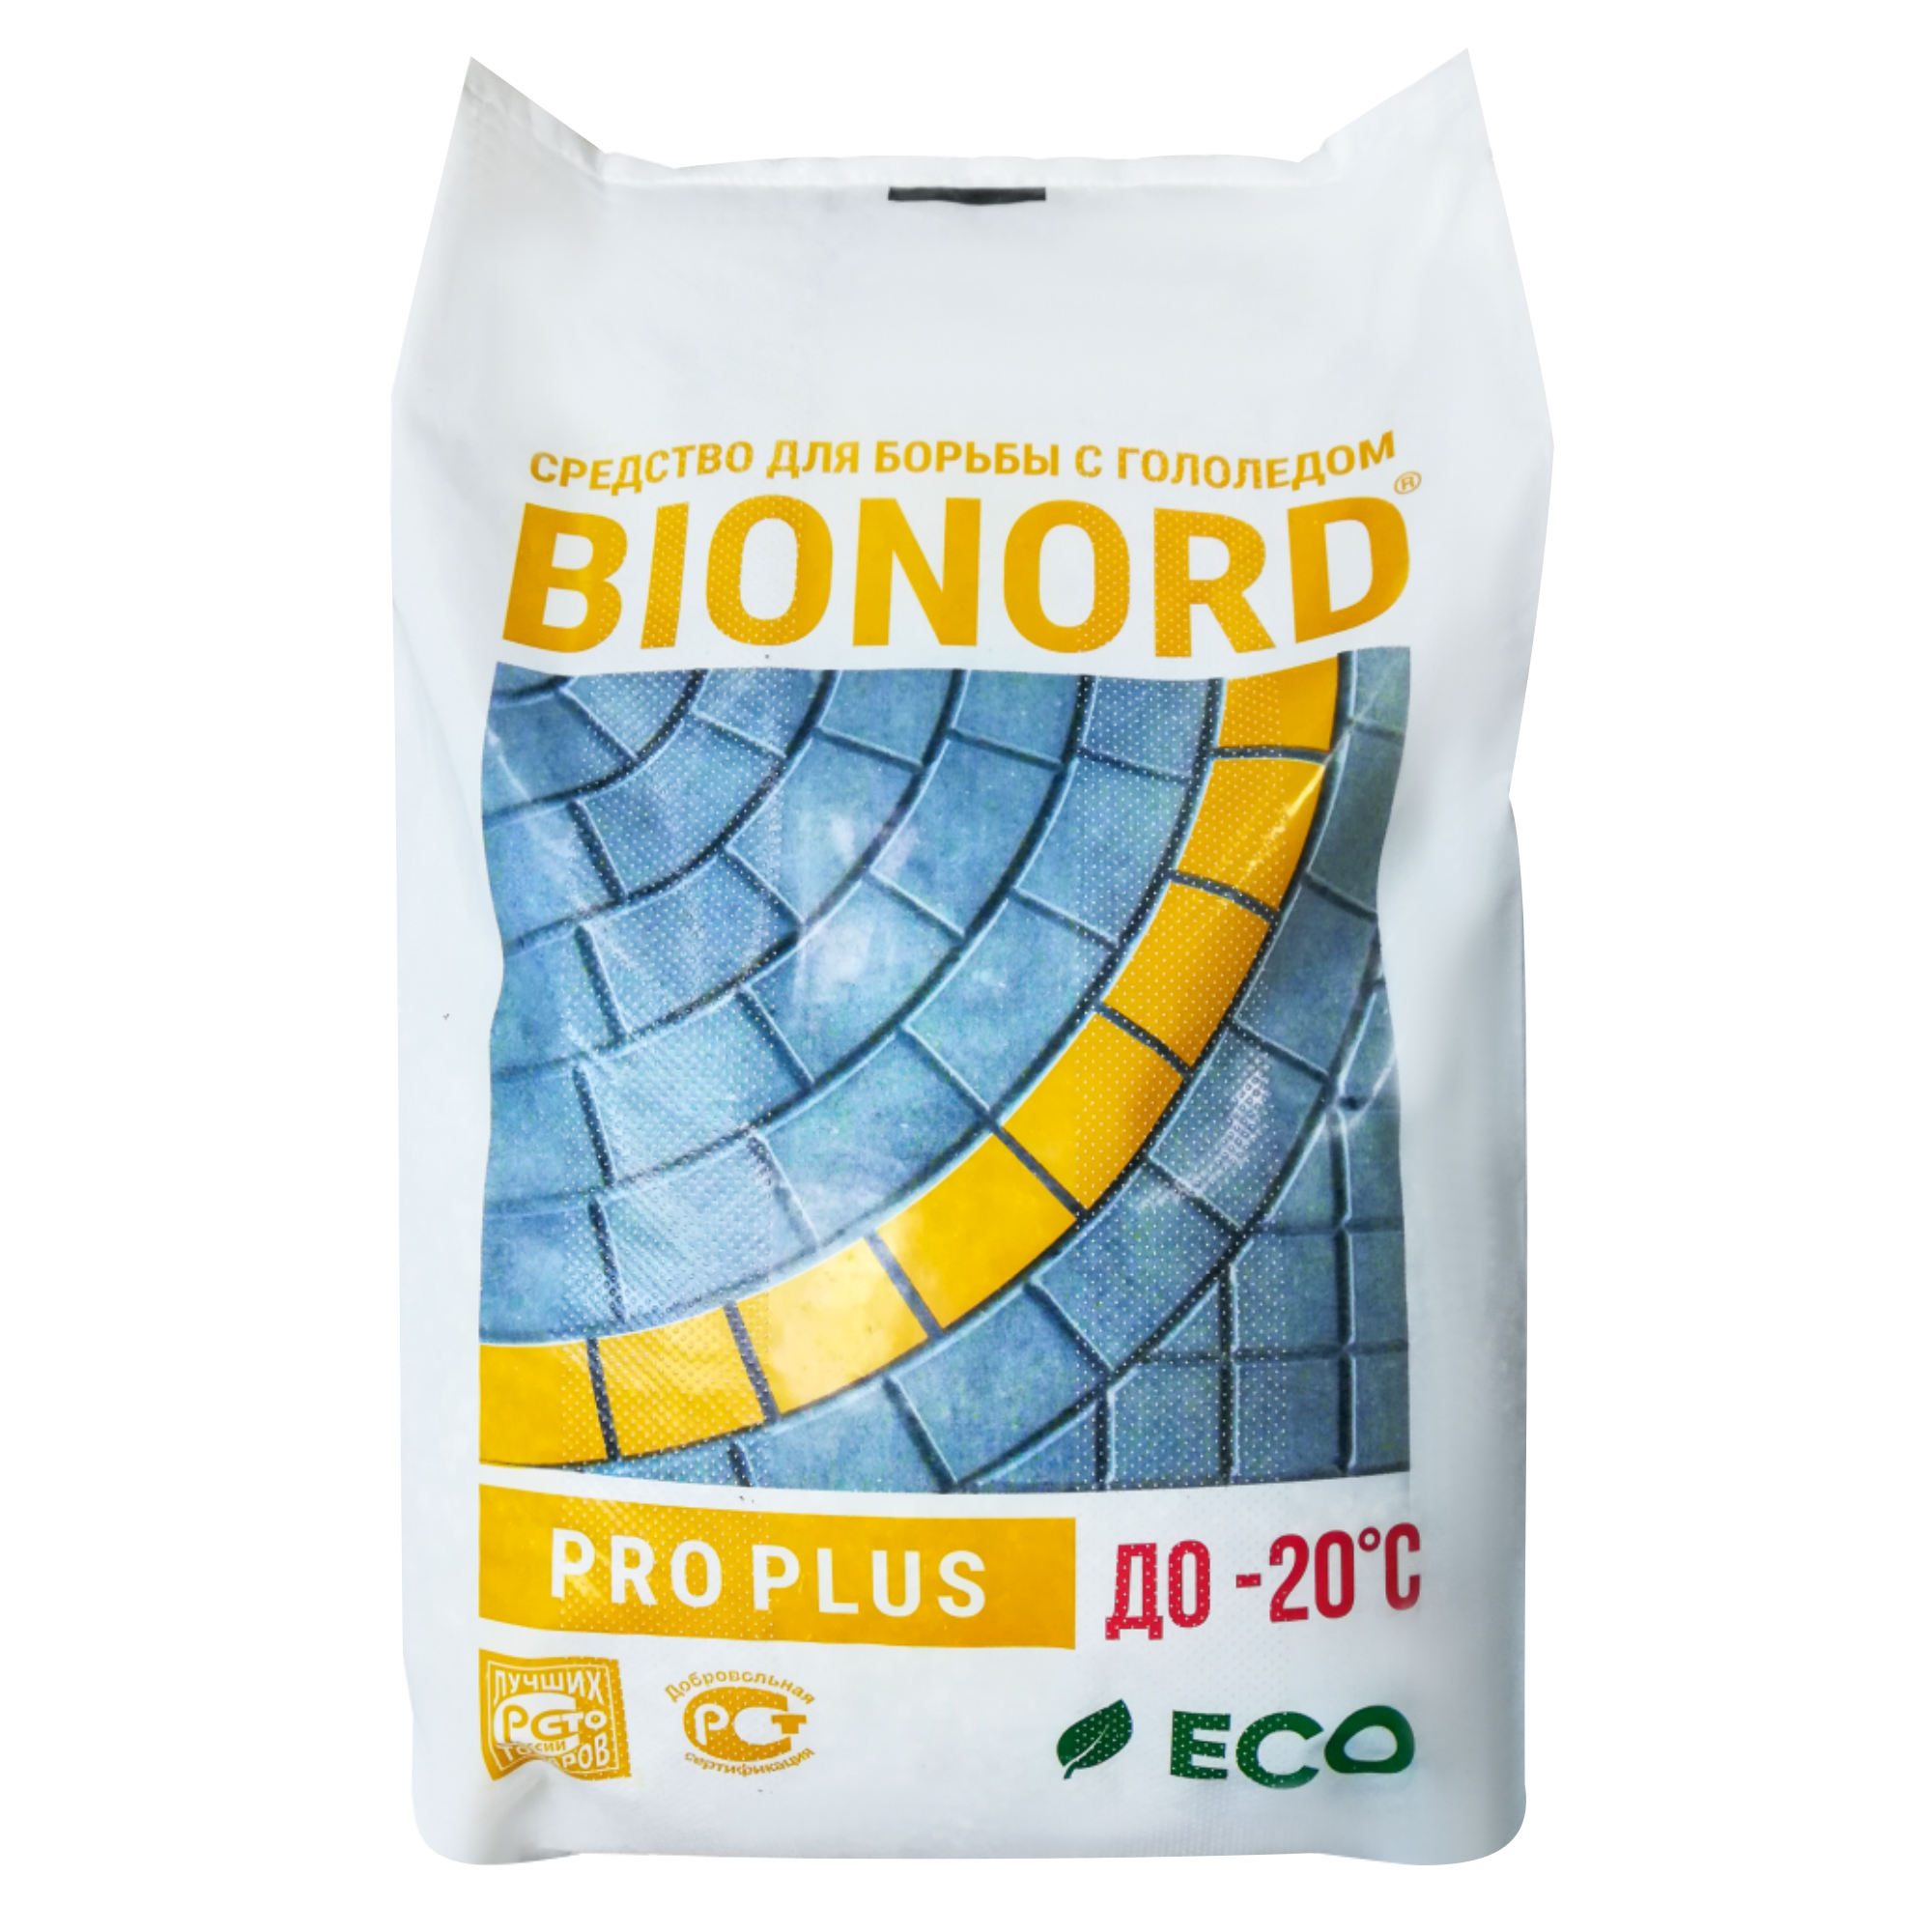 Реагент противогололедный BIONORD Про плюс 23 кг реагент фертика icecare green до 20c 10кг